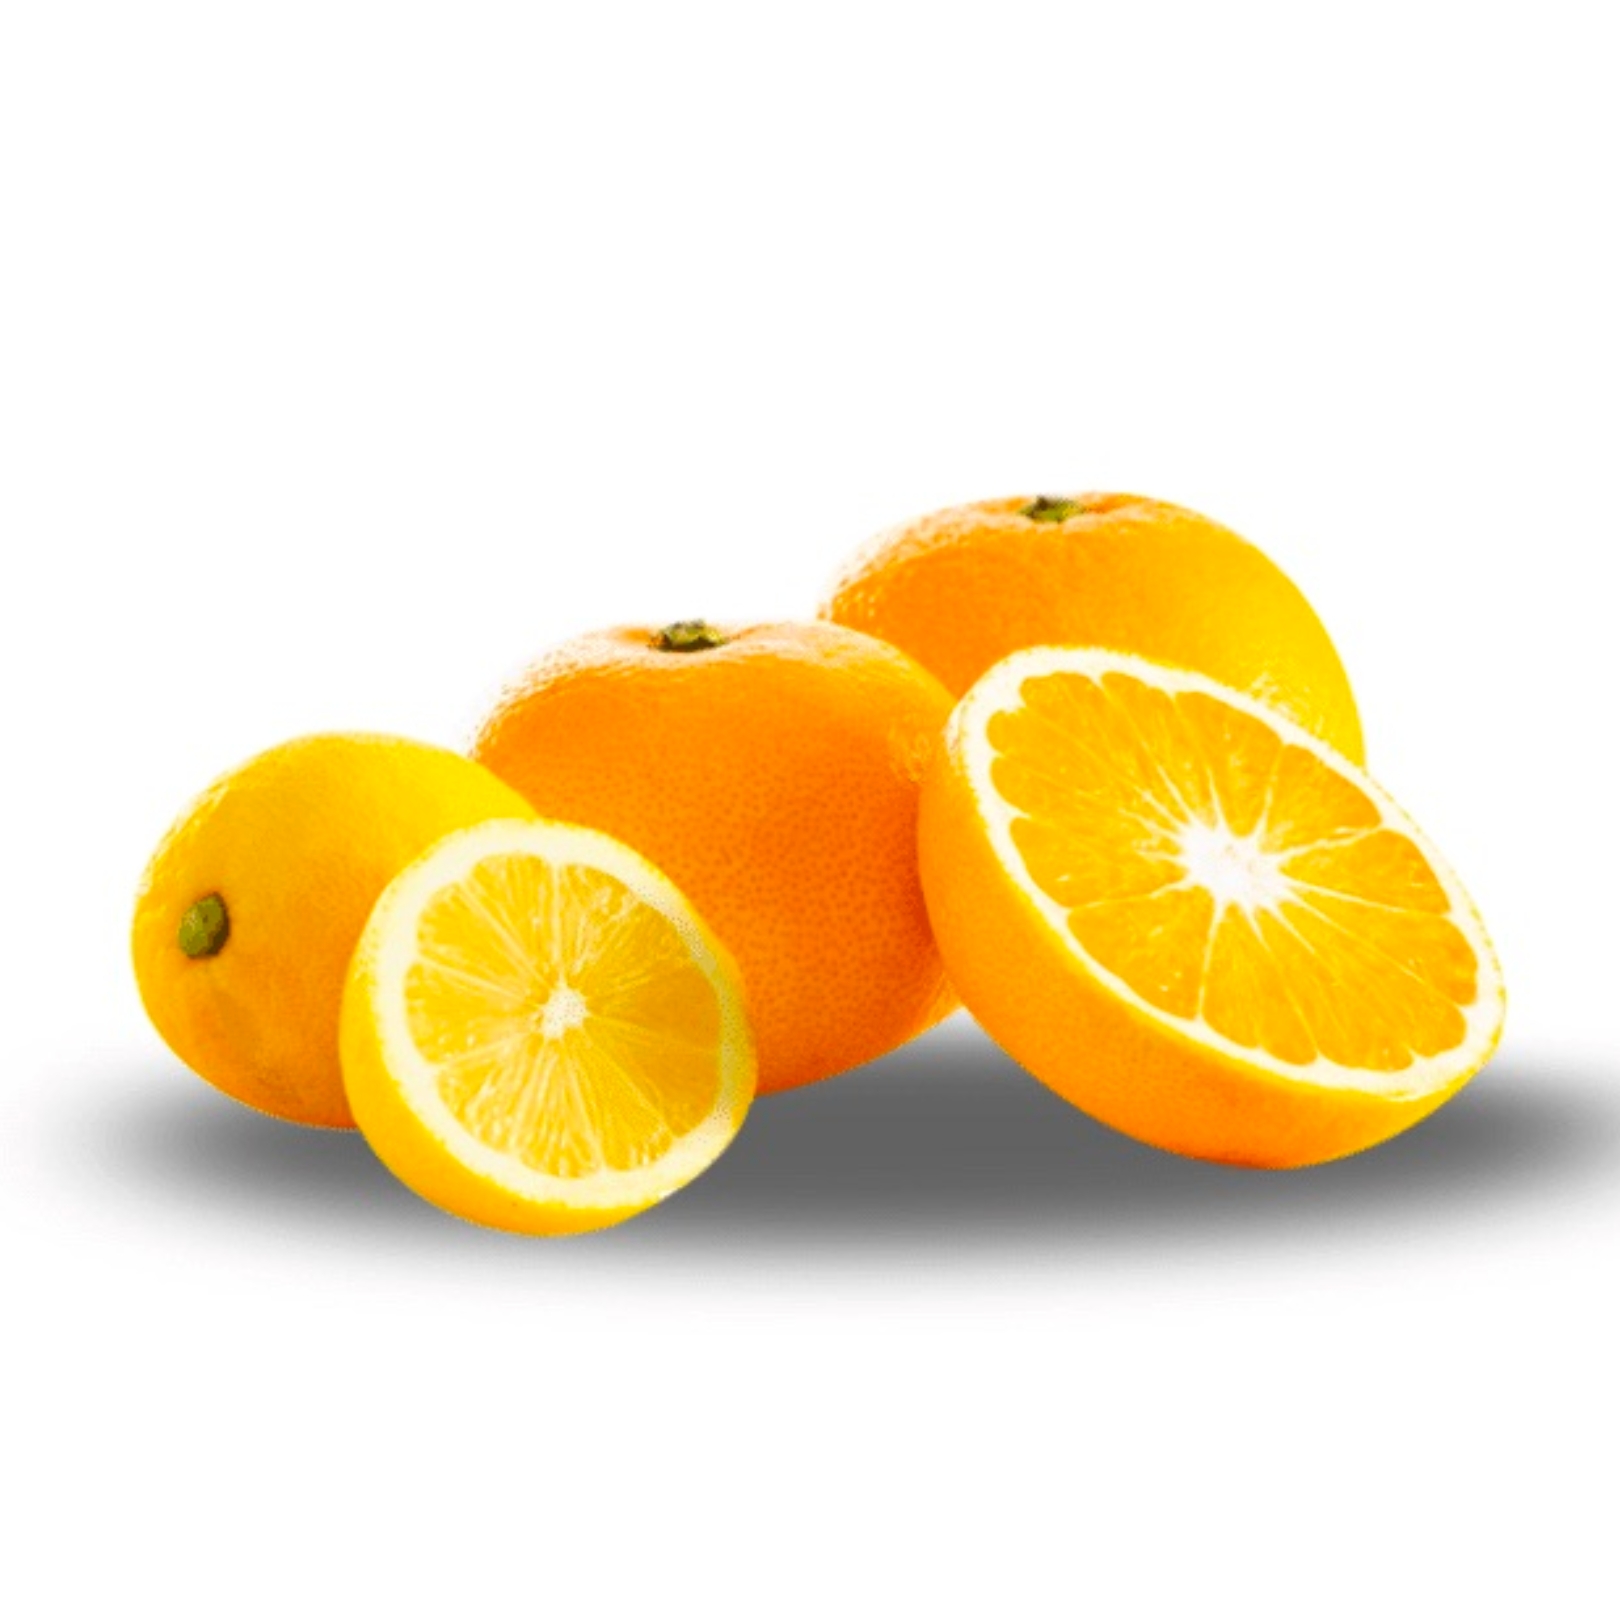 Buy Grapefruit Lemon Online NZ